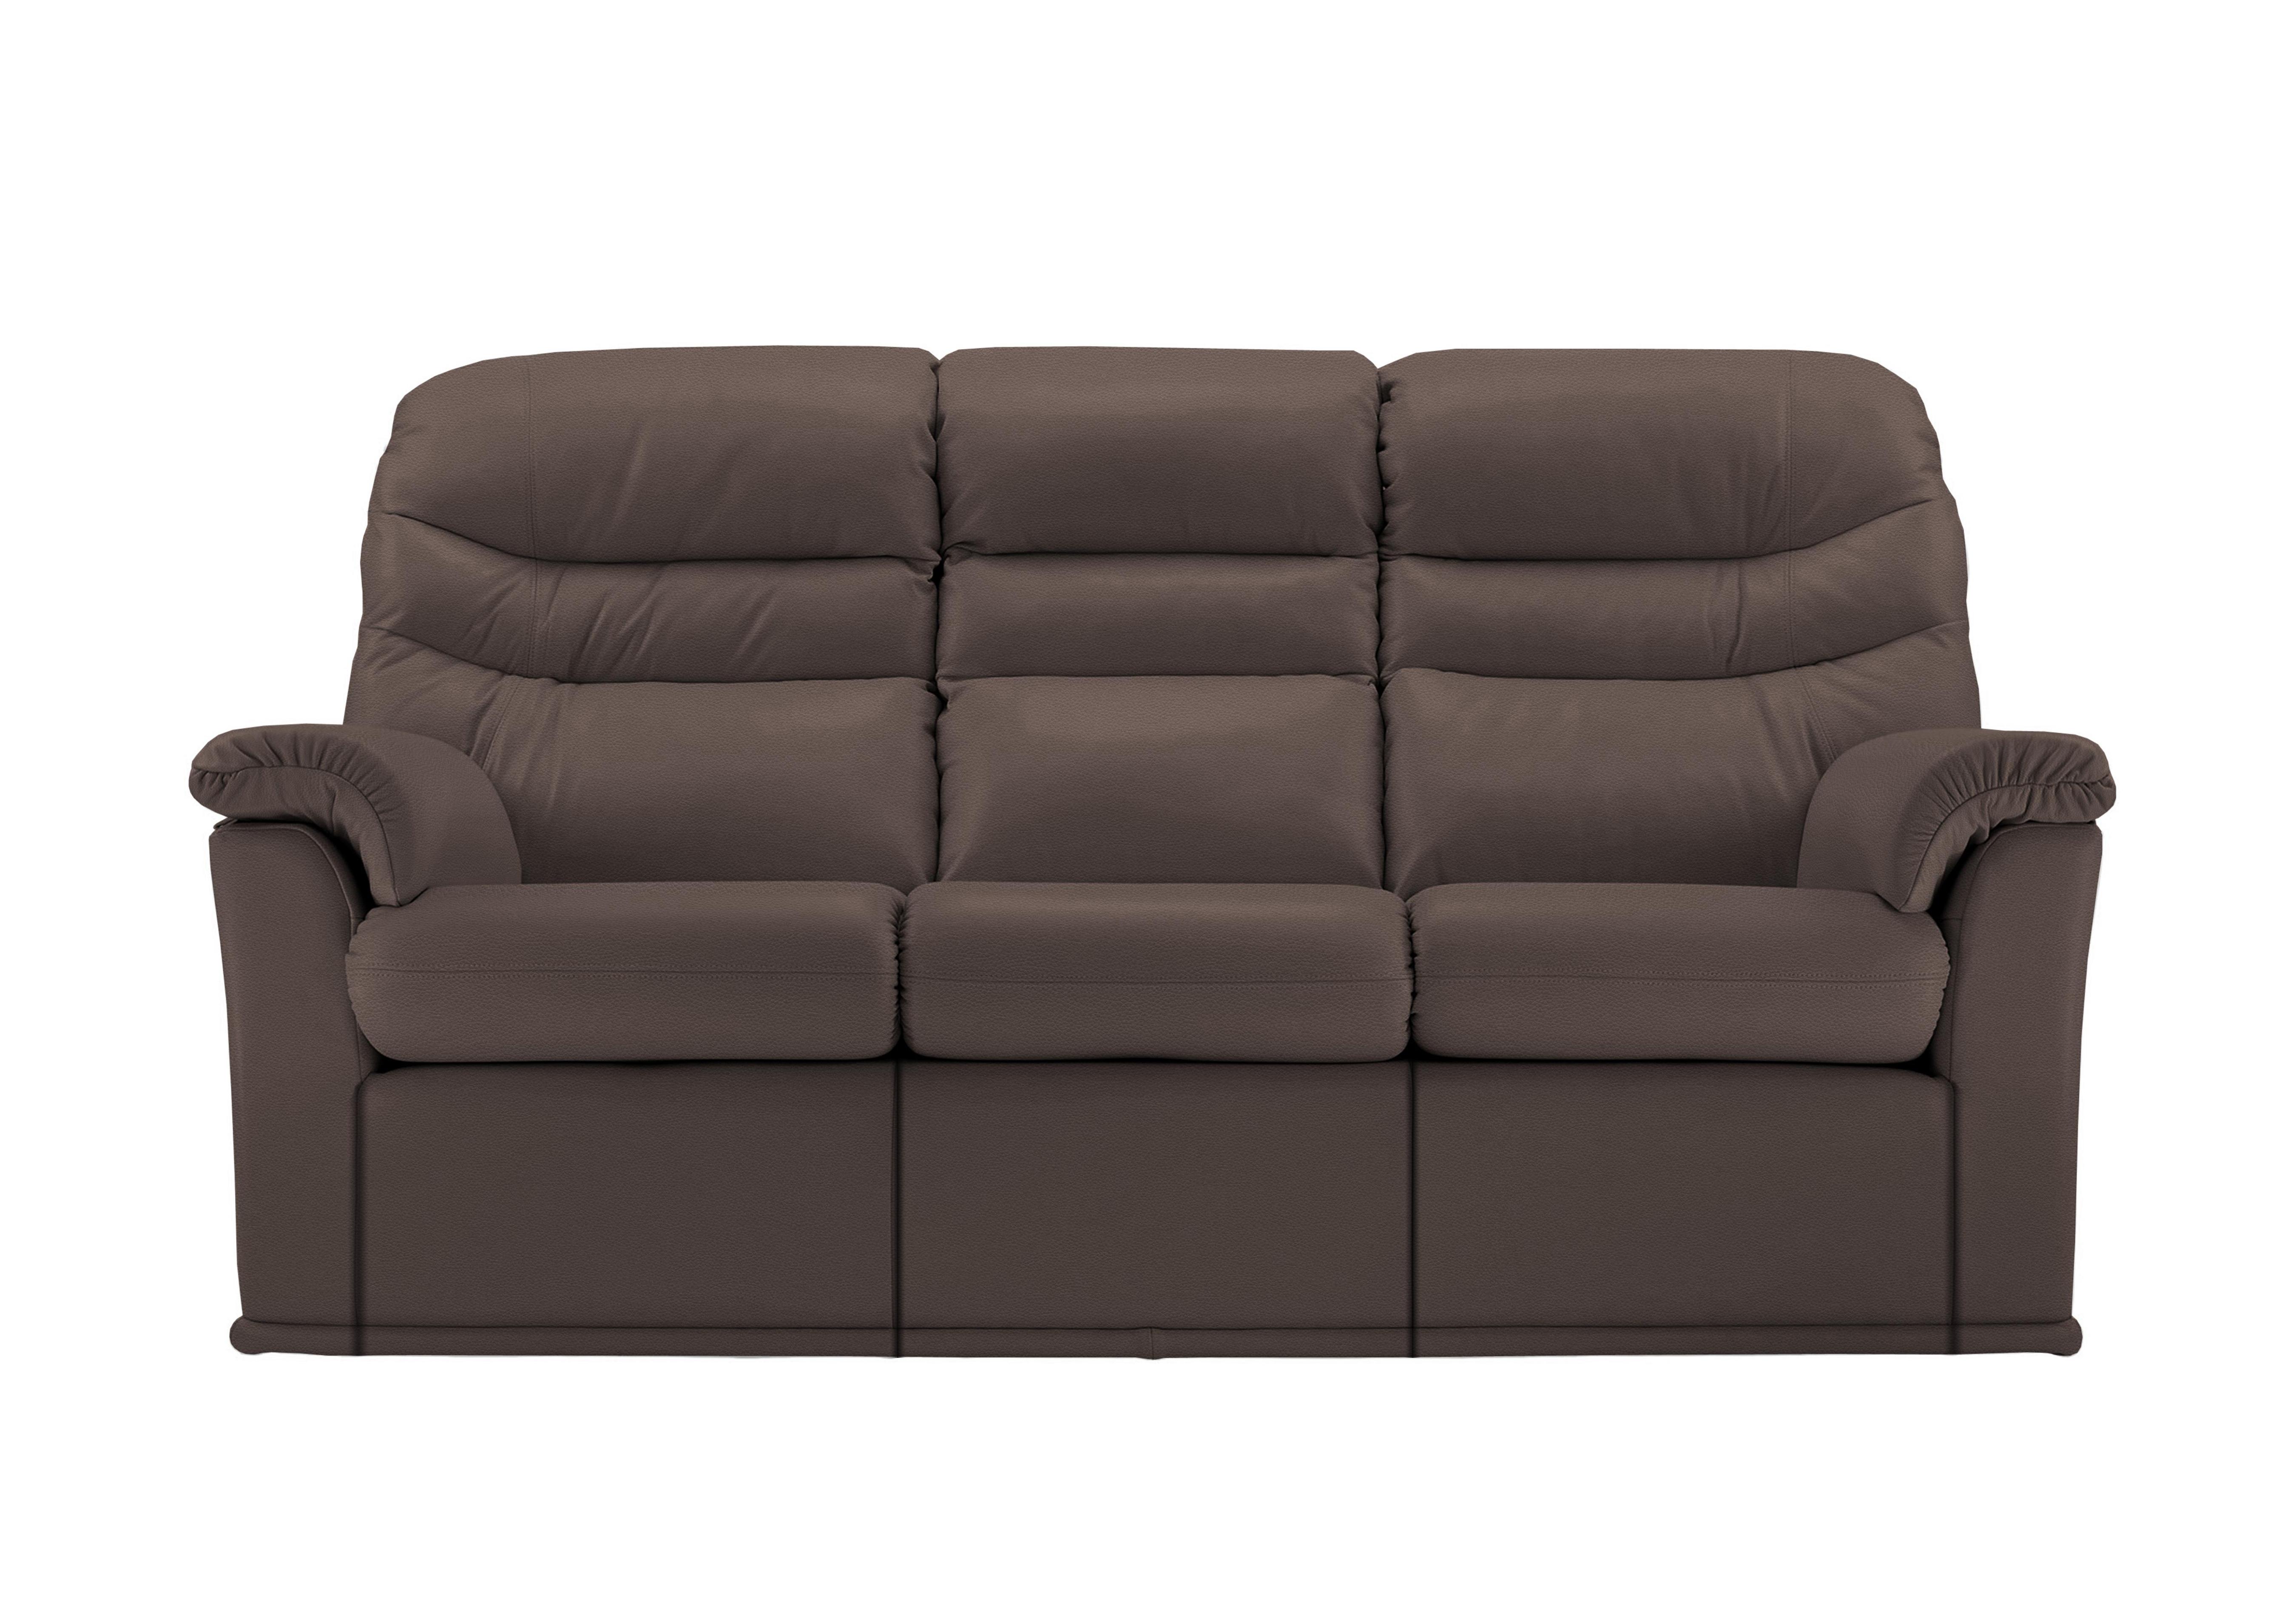 Malvern 3 Seater Leather Sofa in H003 Oxford Chocolate on Furniture Village